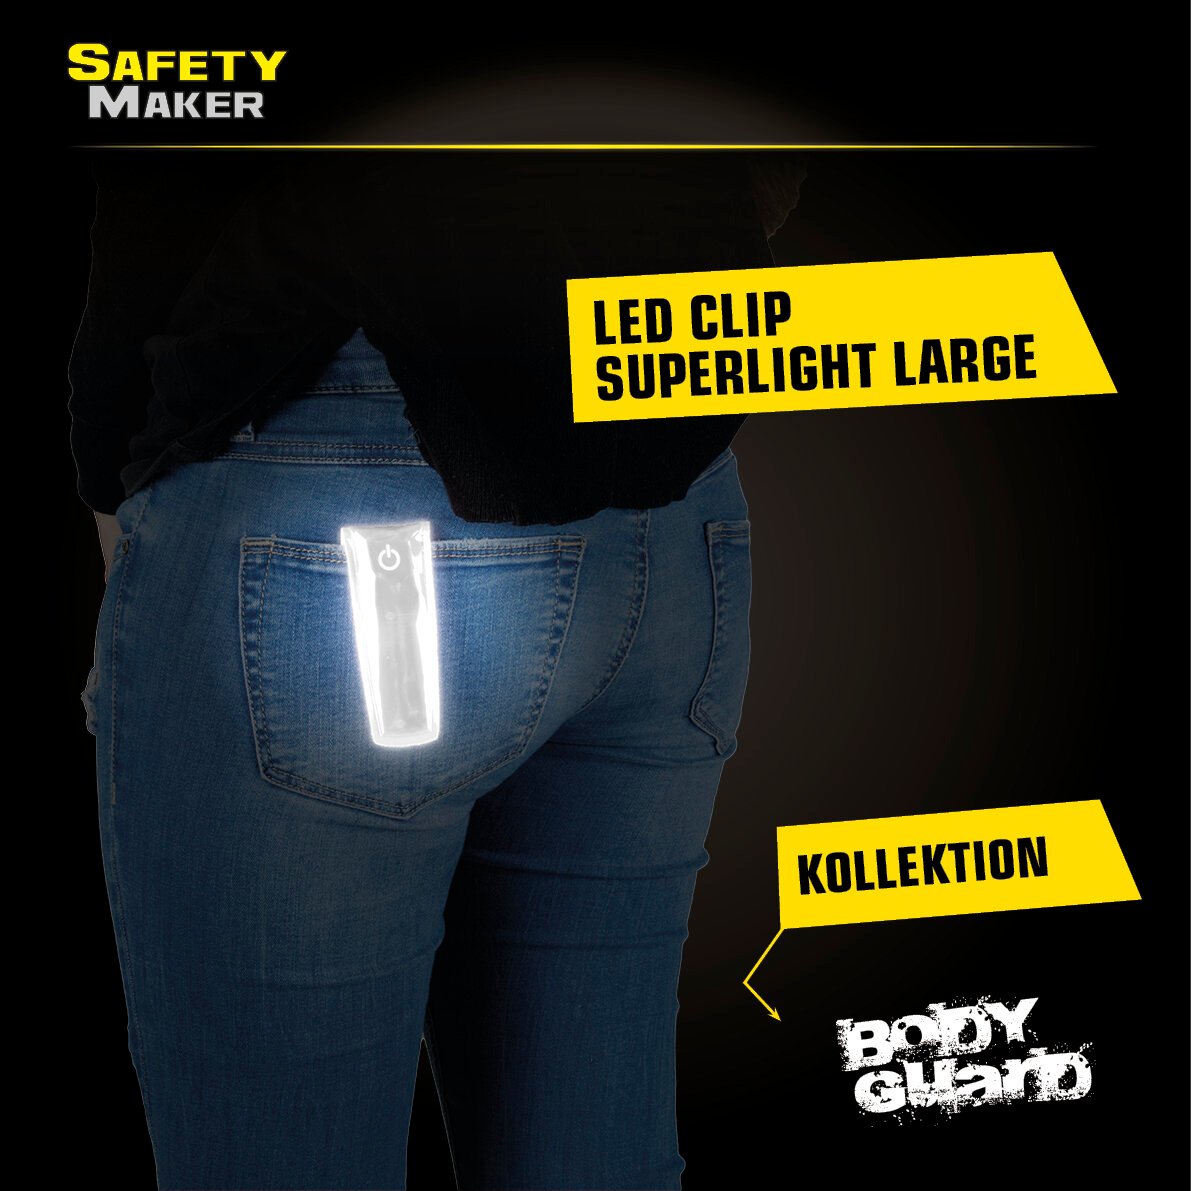 Multilight XL, LED-Clip silber